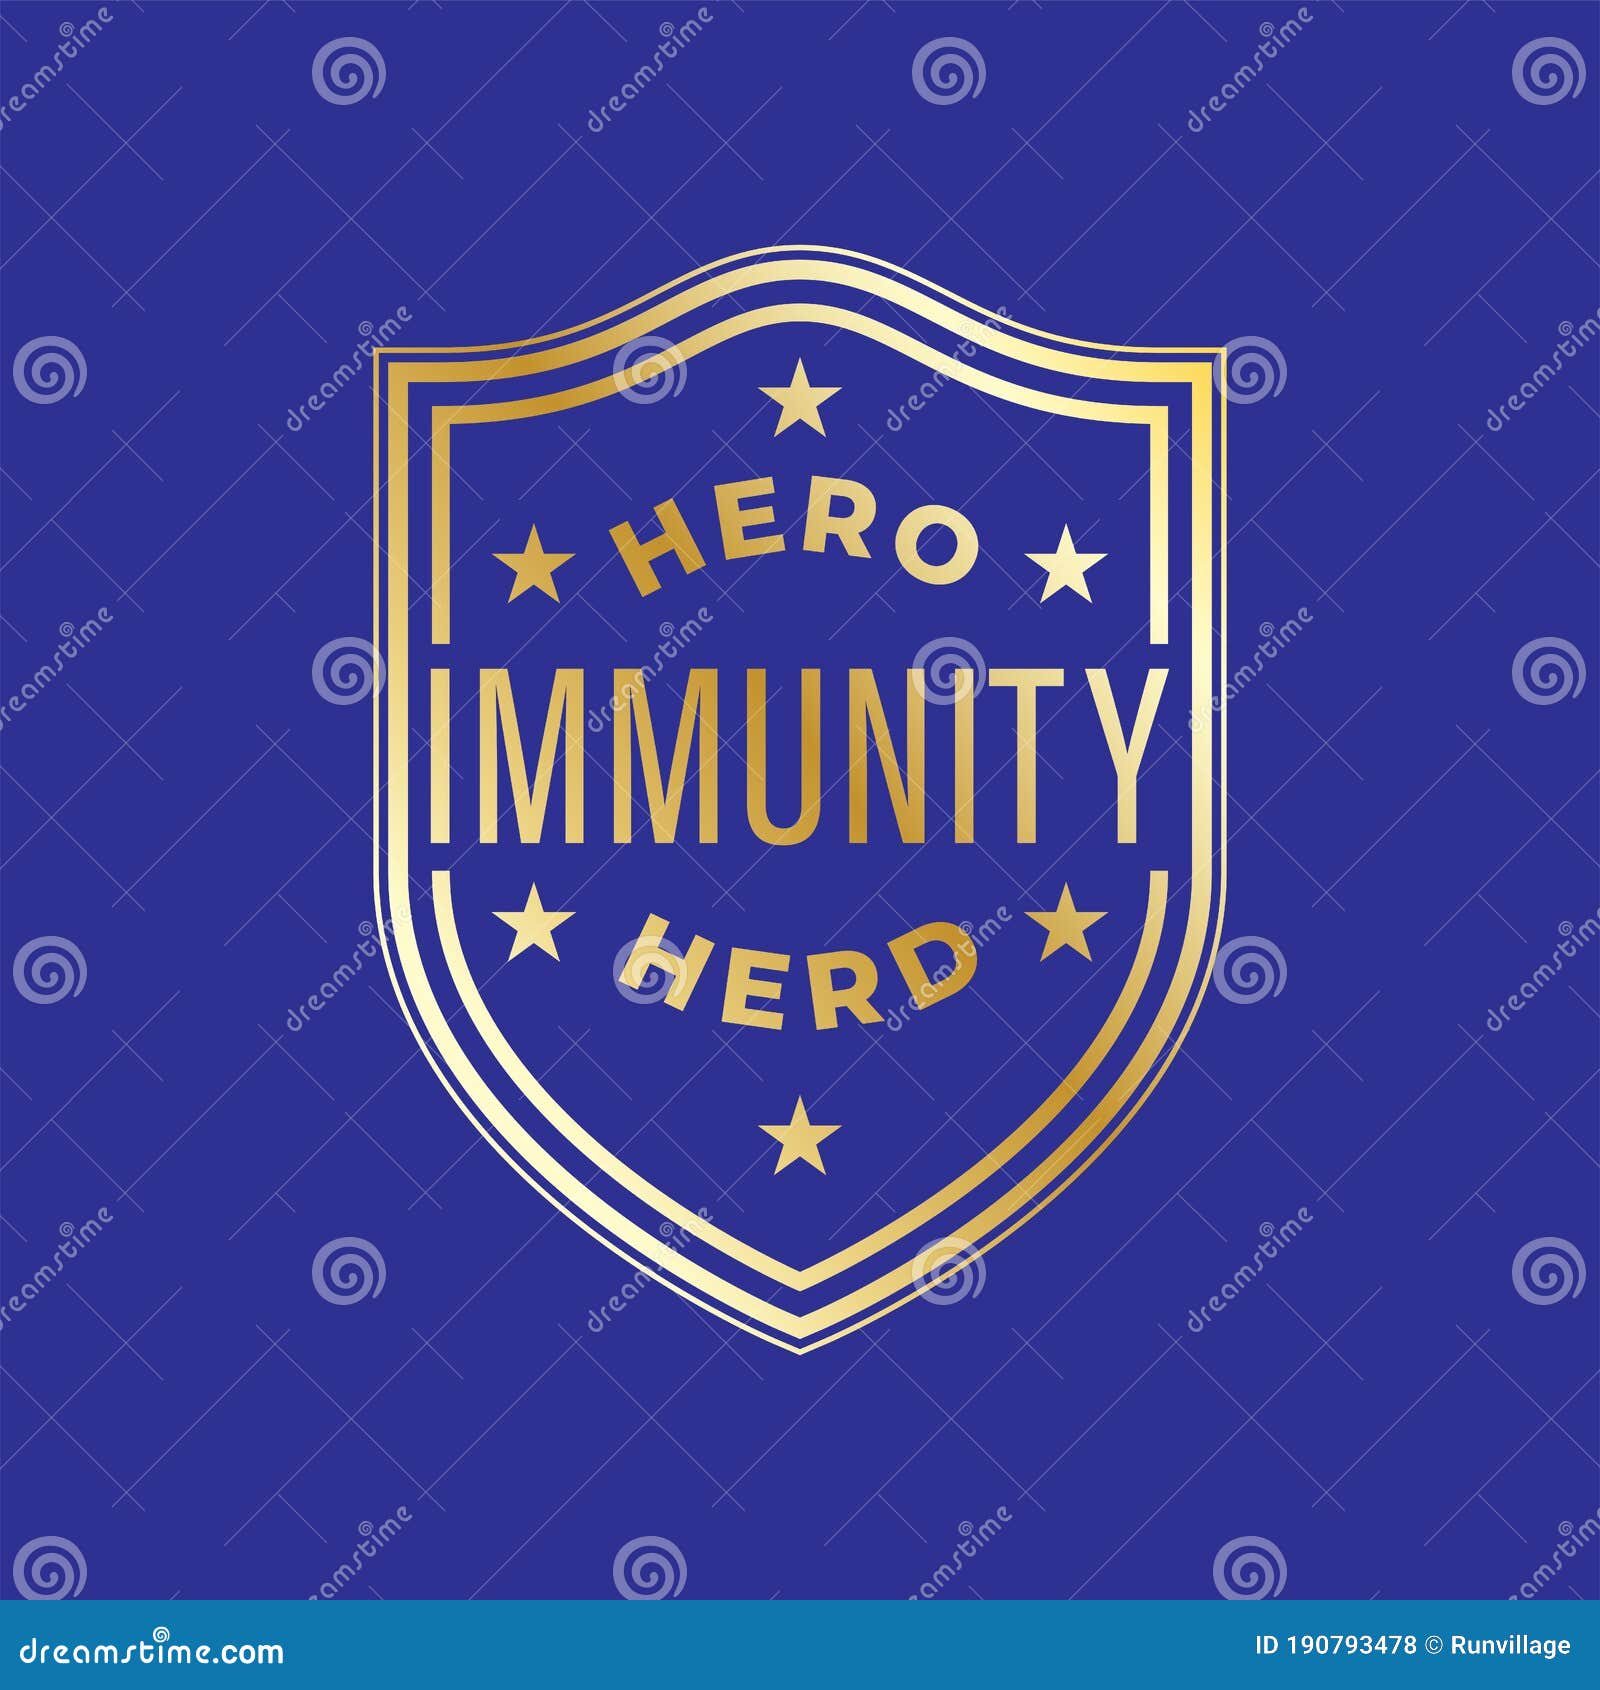 herd immunity logo icon for new normal lifestye concept